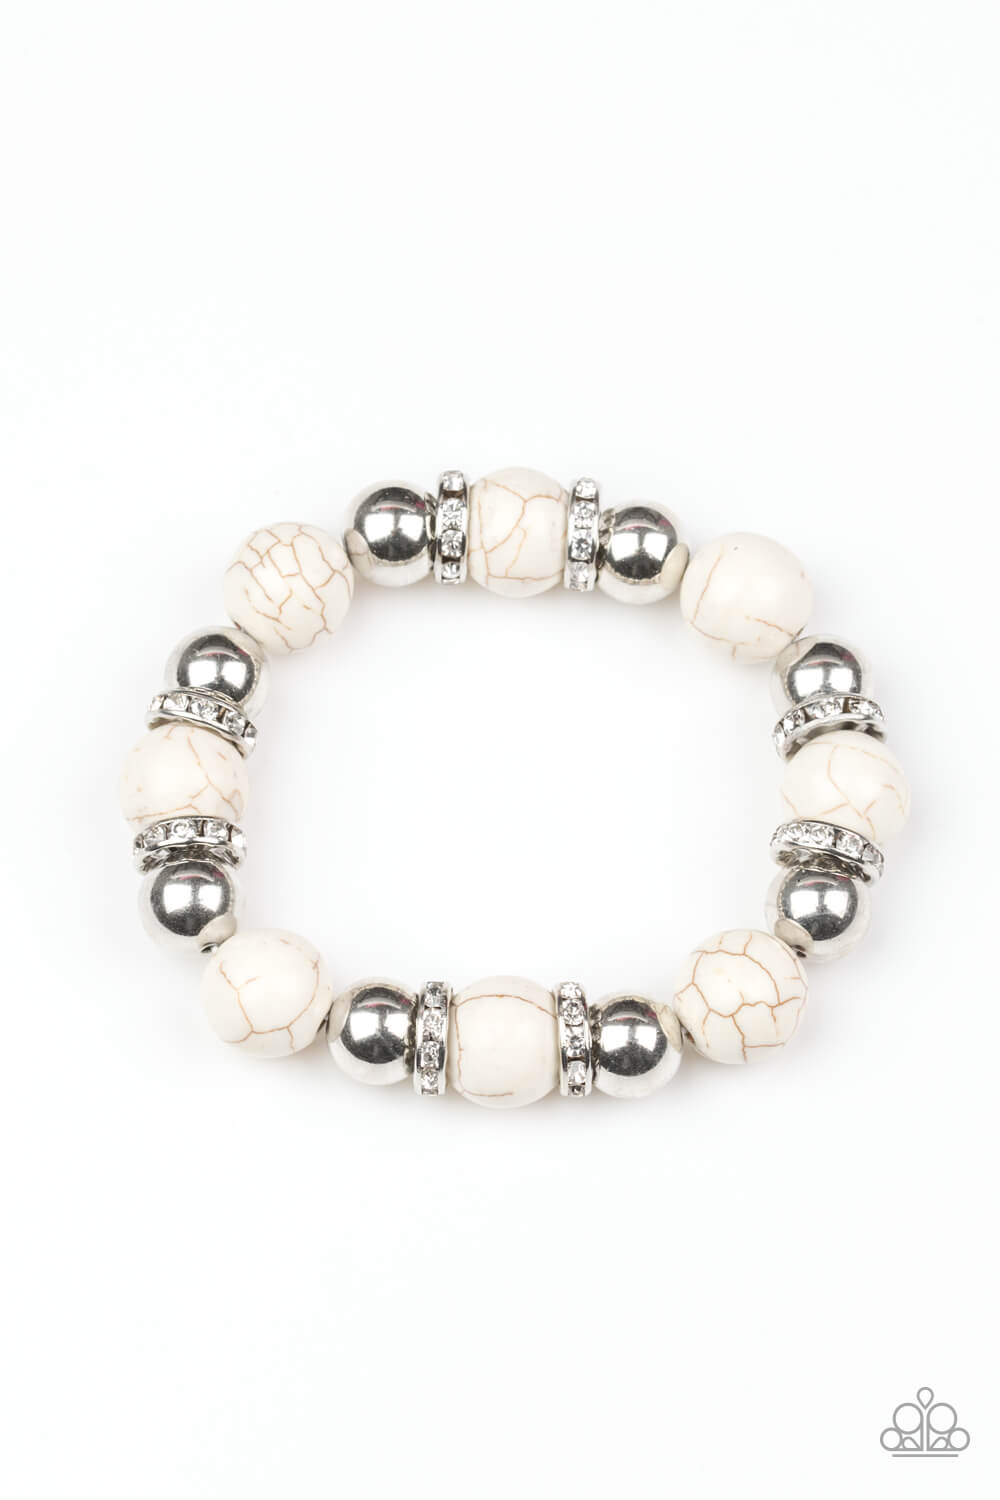 Ruling Class Radiance White Stone Bracelet - Princess Glam Shop